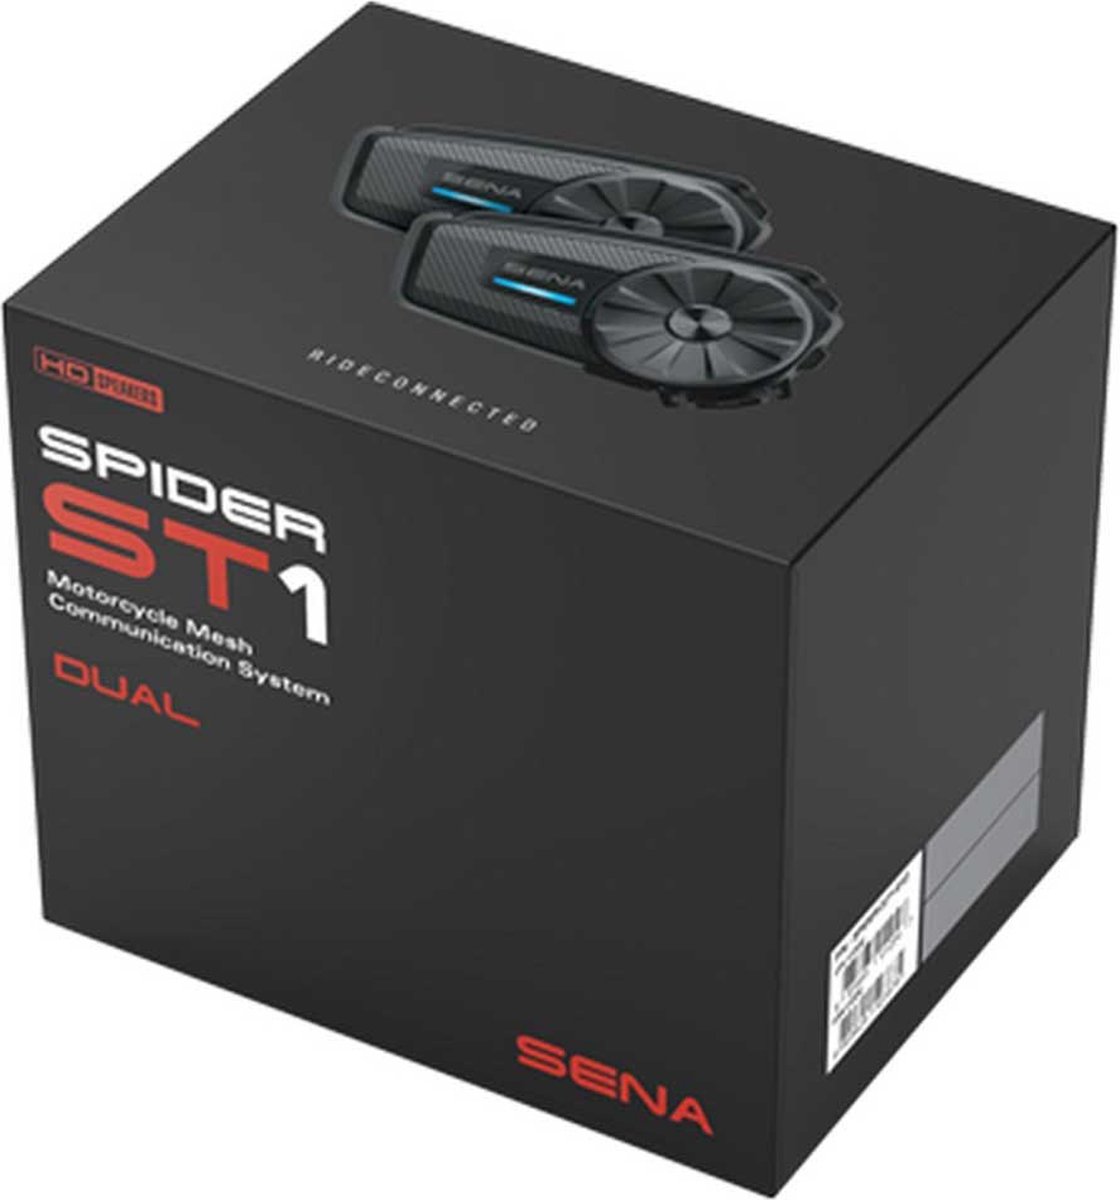 Sena Spider ST1 Dual Bluetooth Communicatiesysteem - Maat -